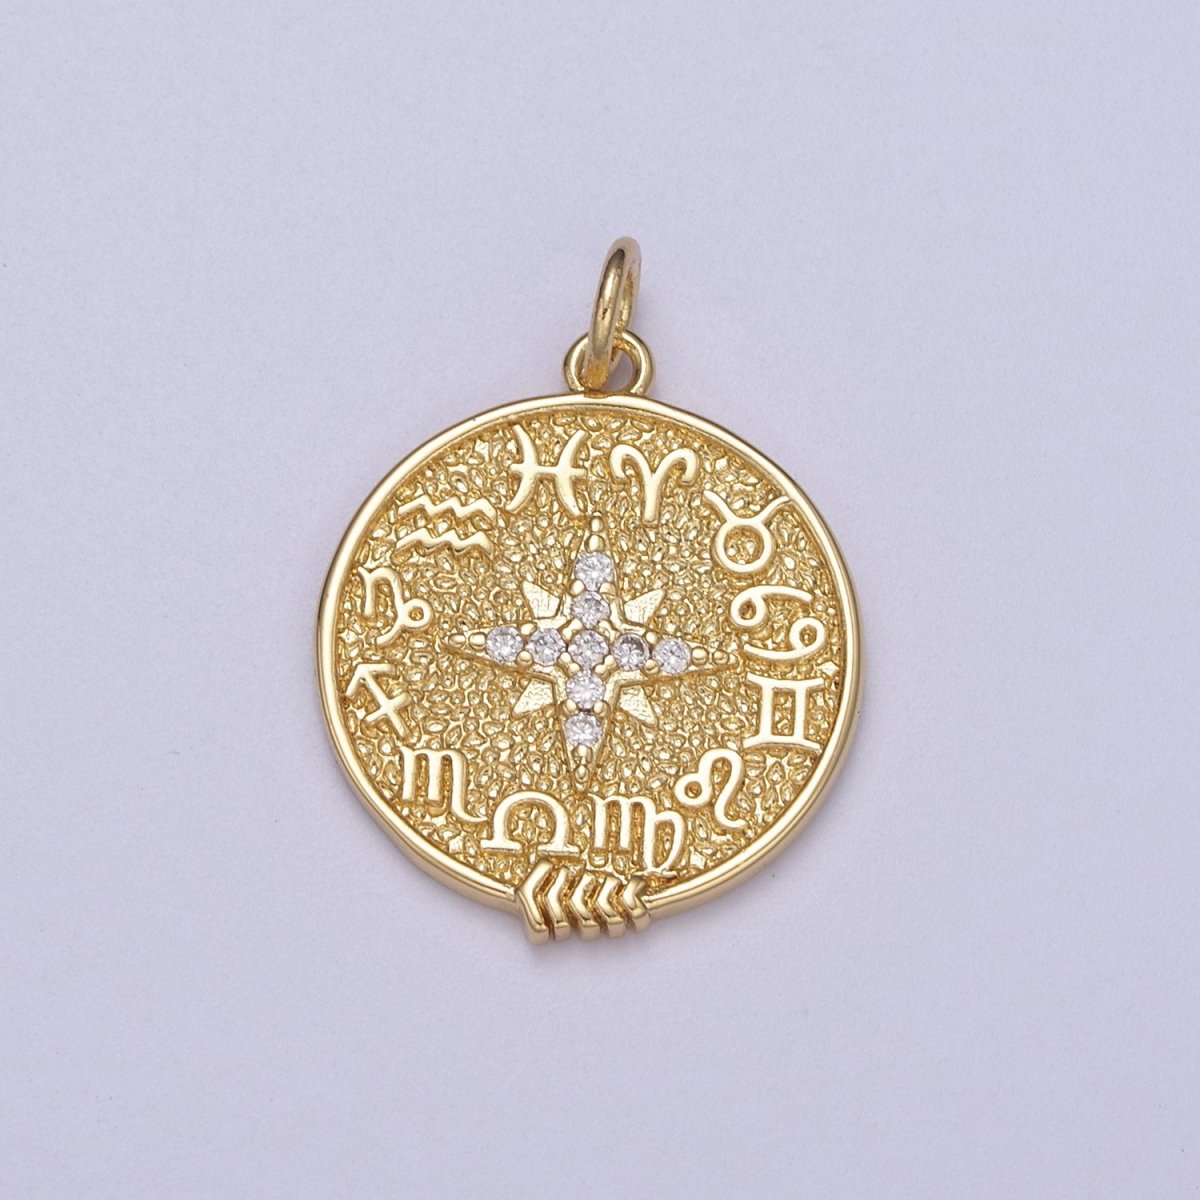 24K Gold Filled Zodiac Charm Necklace • Gold Astrology Zodiac Signs Circle Necklace Pendant HoroscopeC-340 - DLUXCA